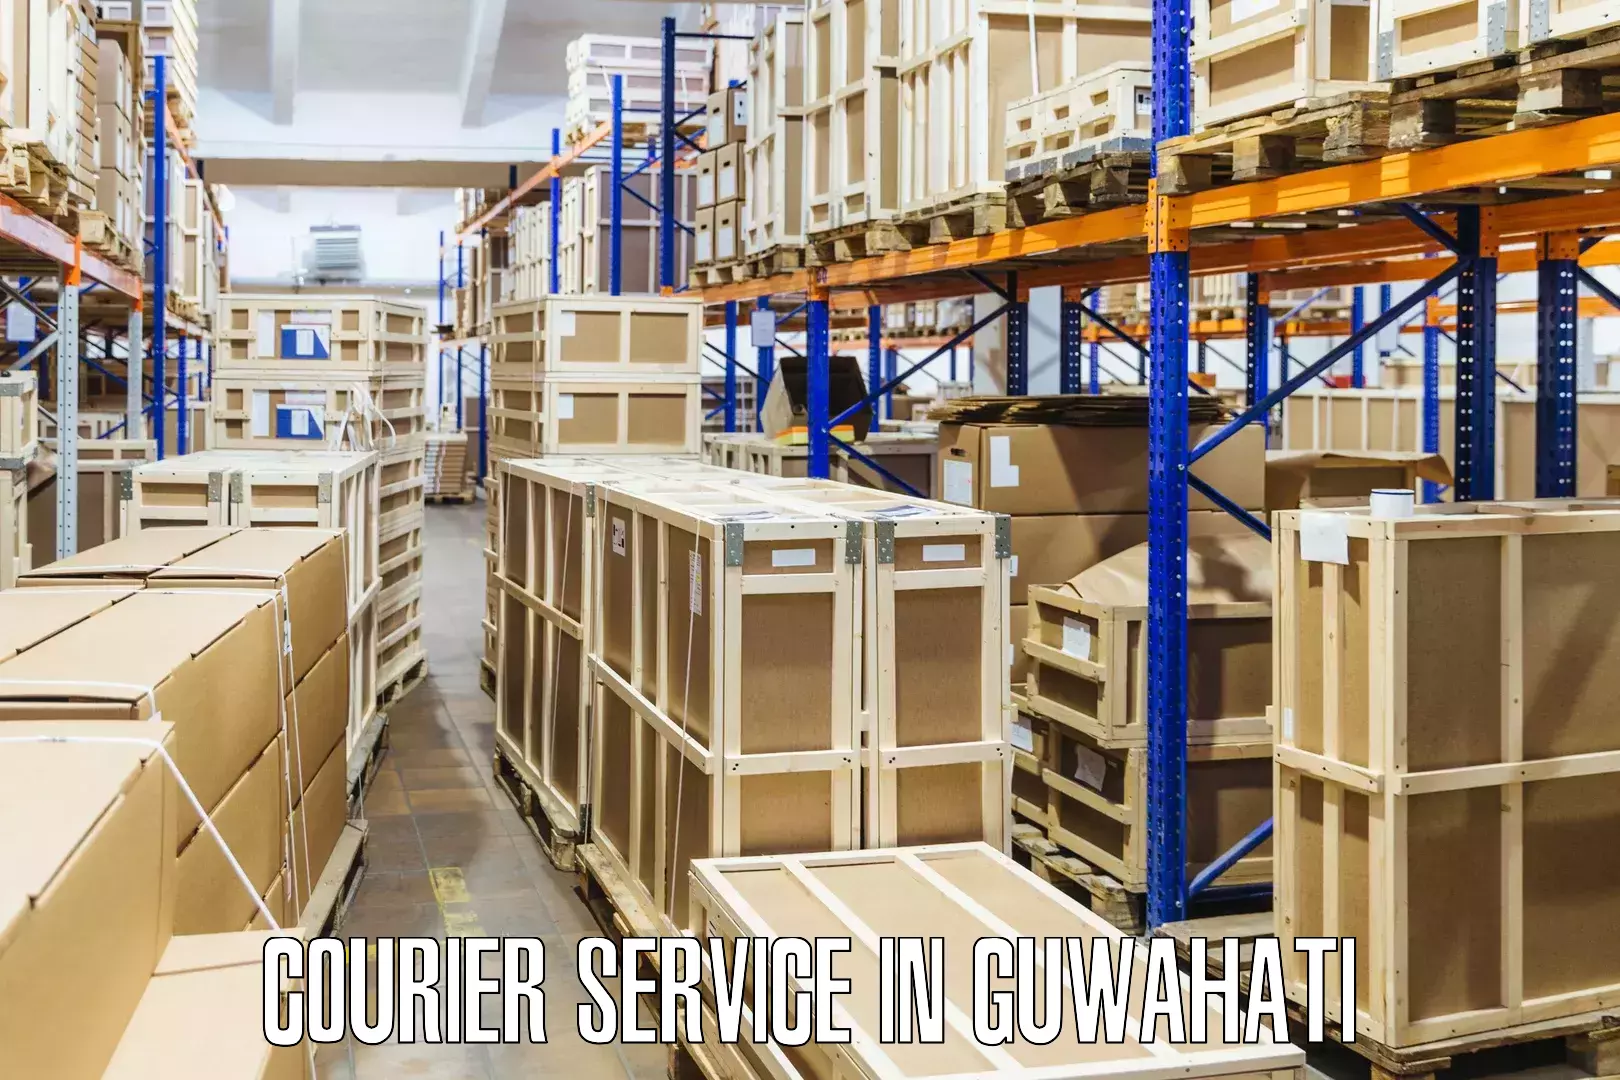 Return courier service in Guwahati